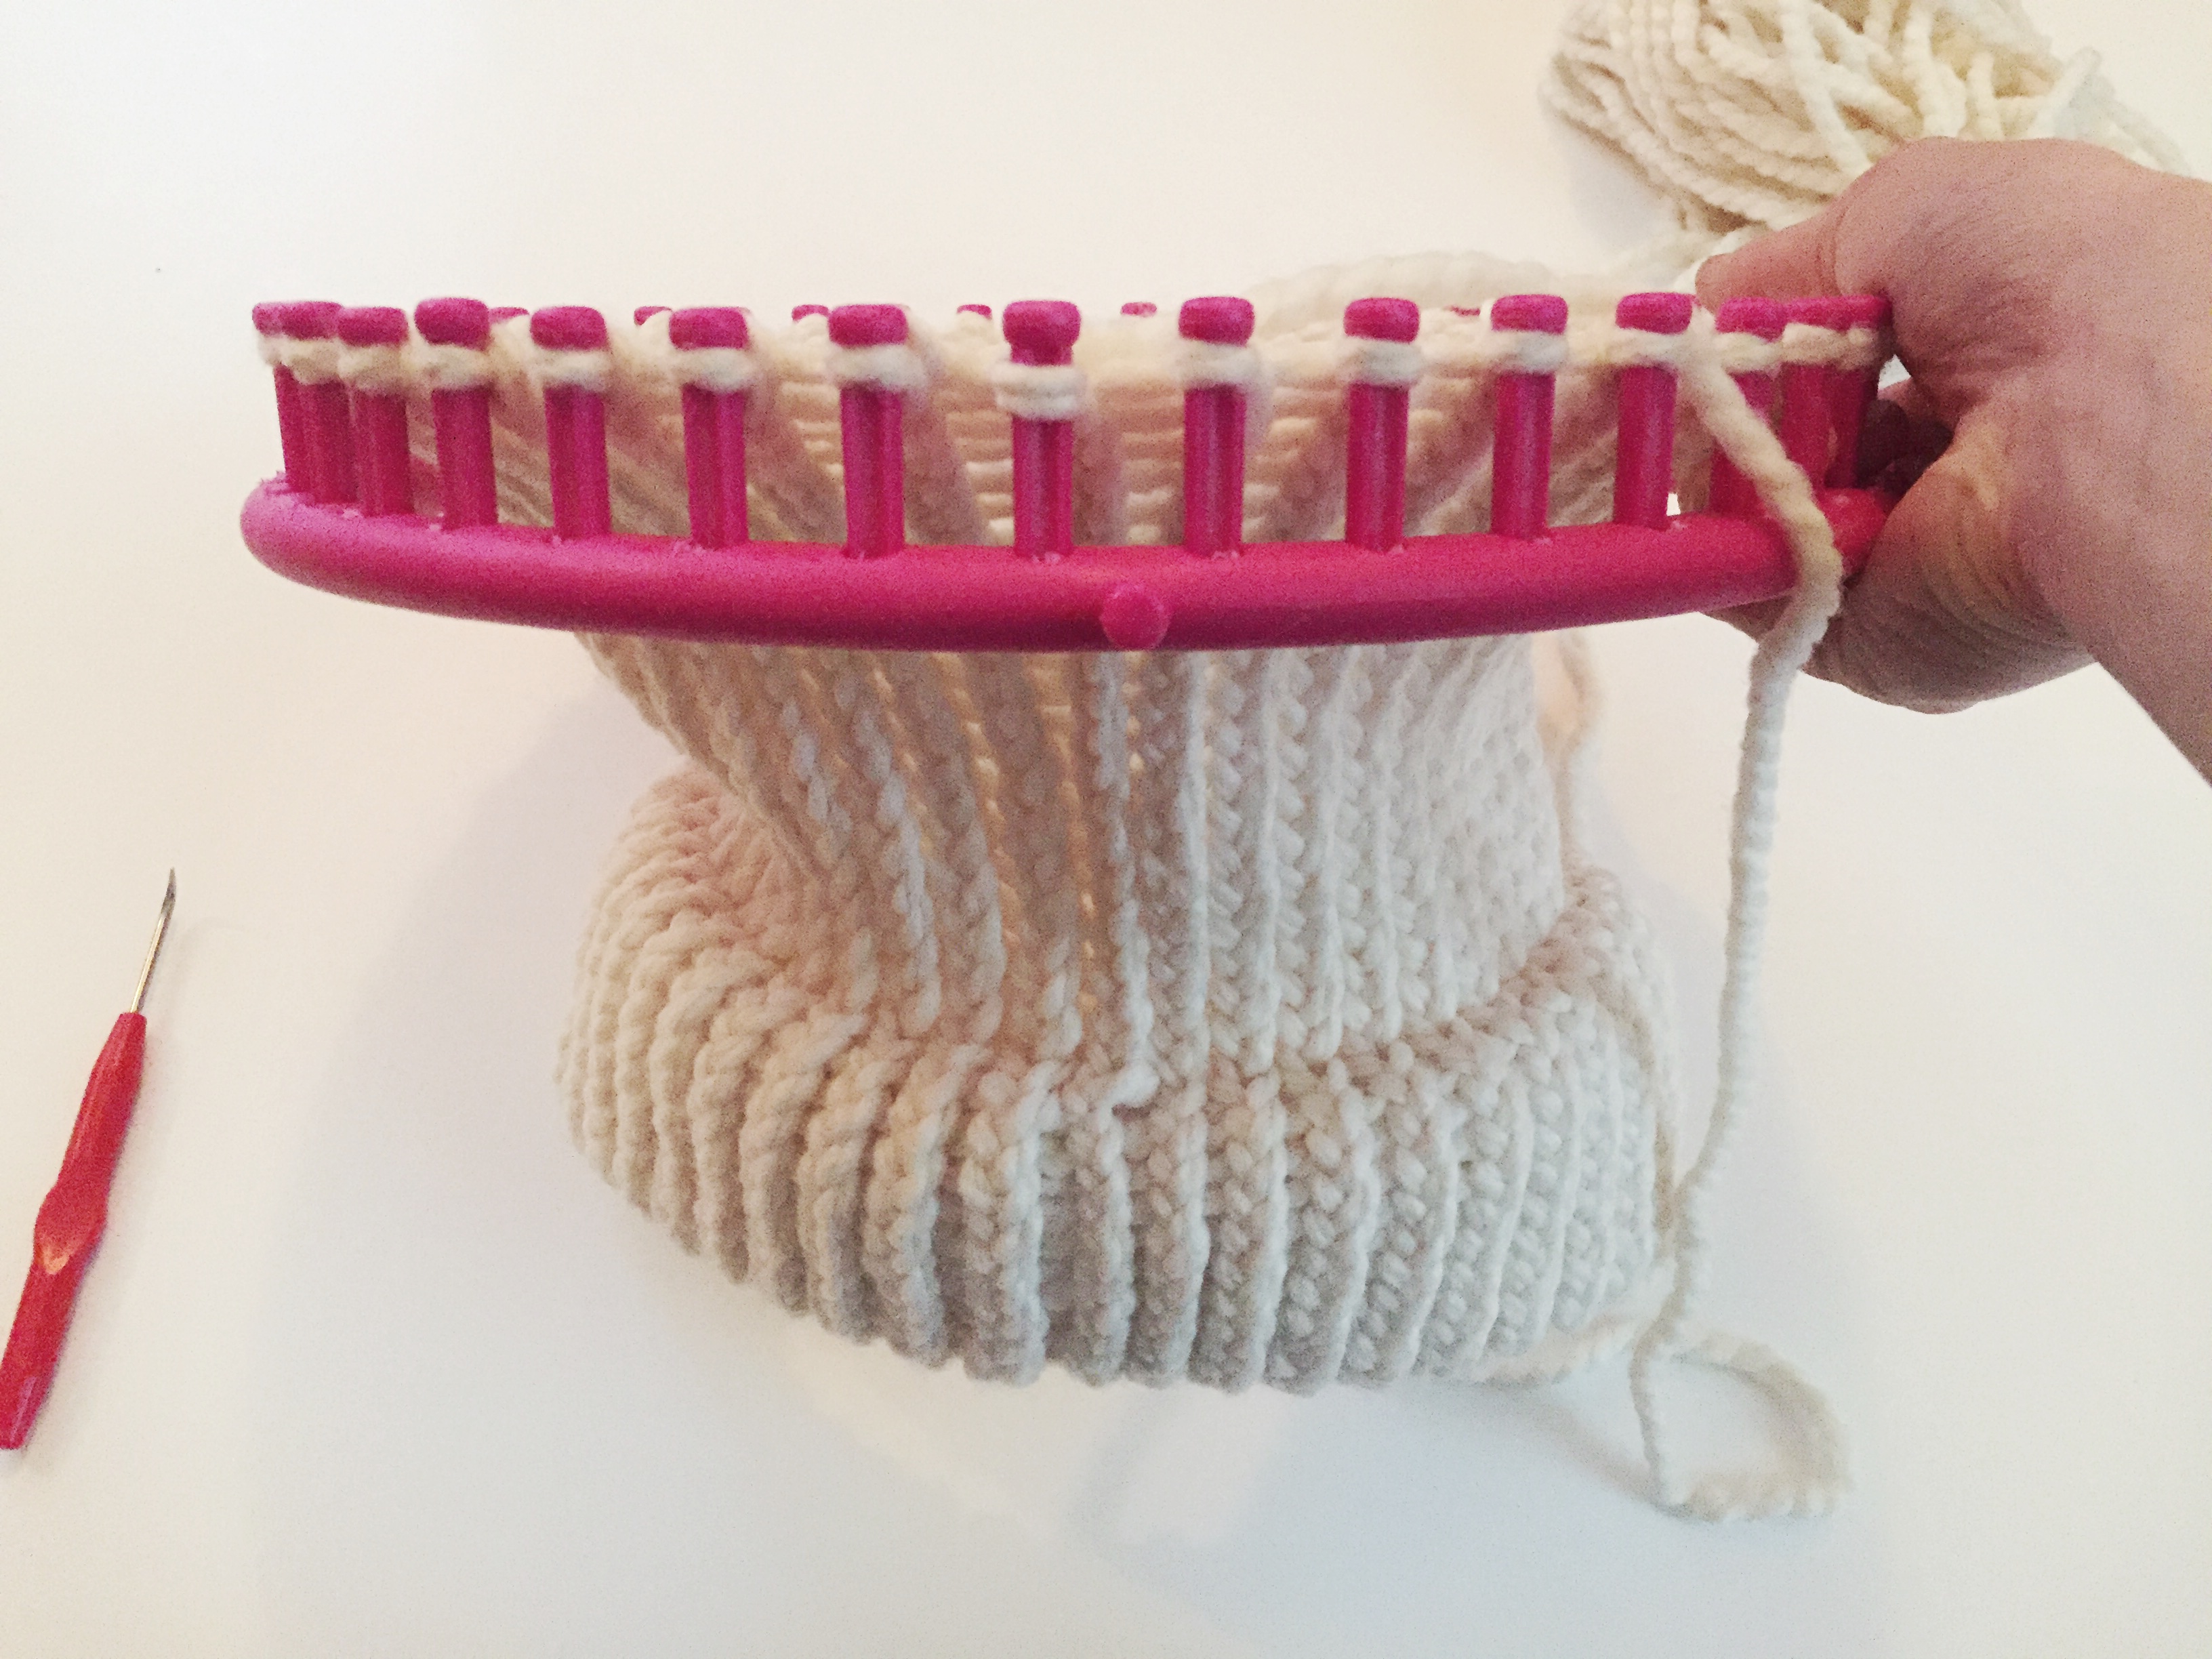 Learn To Loom Knit Double Brim Beanie Tutorial Em S Fiber